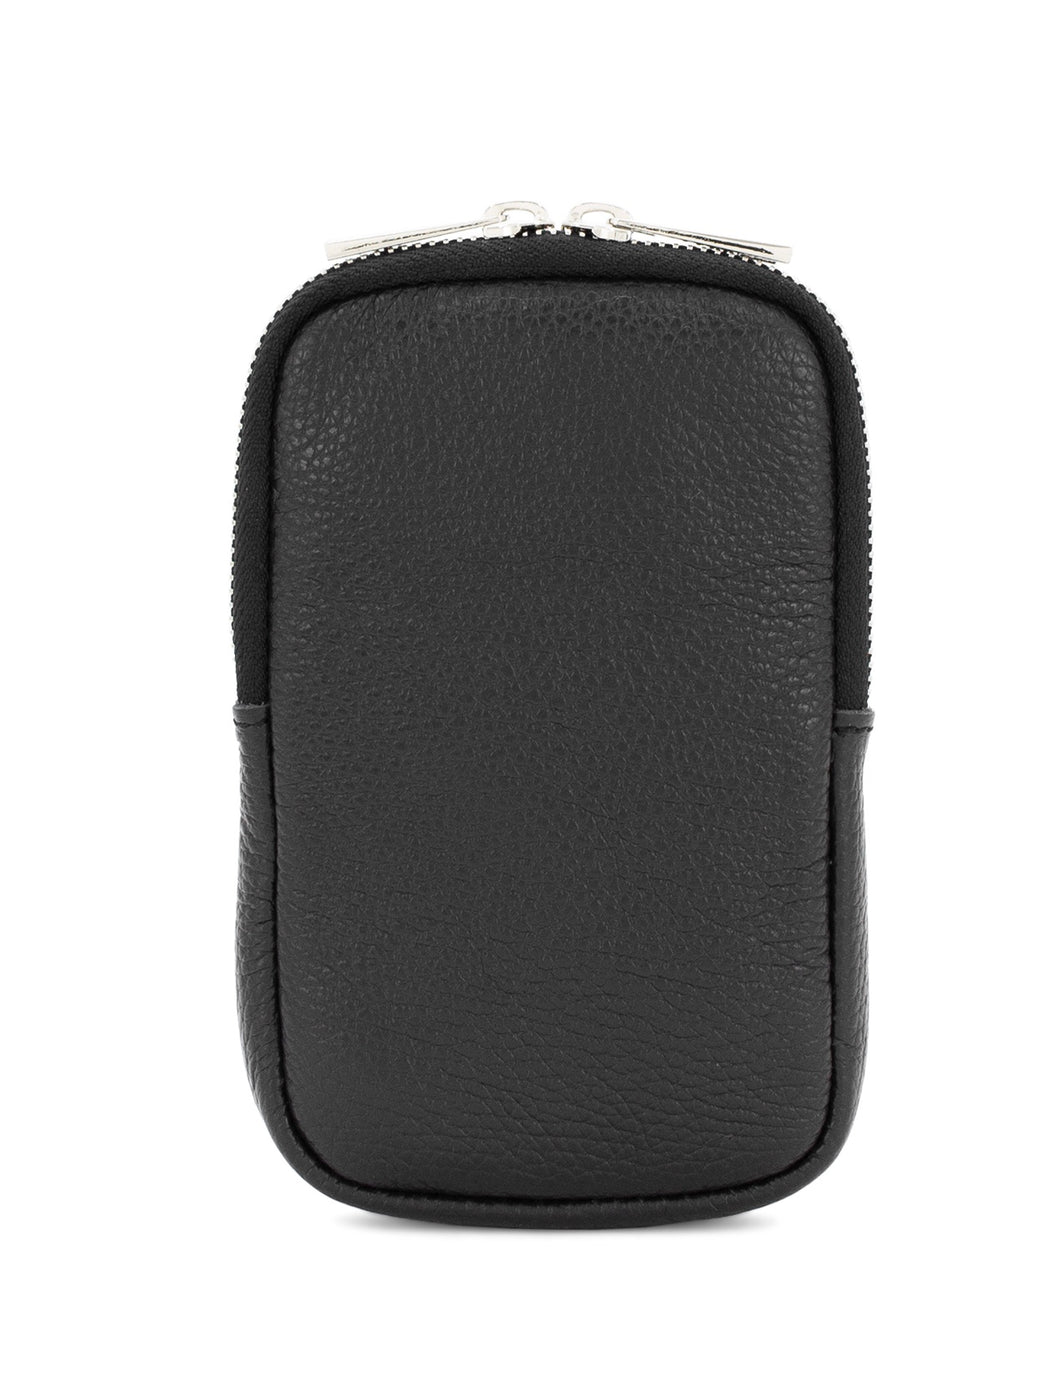 Black Leather Mobile Phone Bag